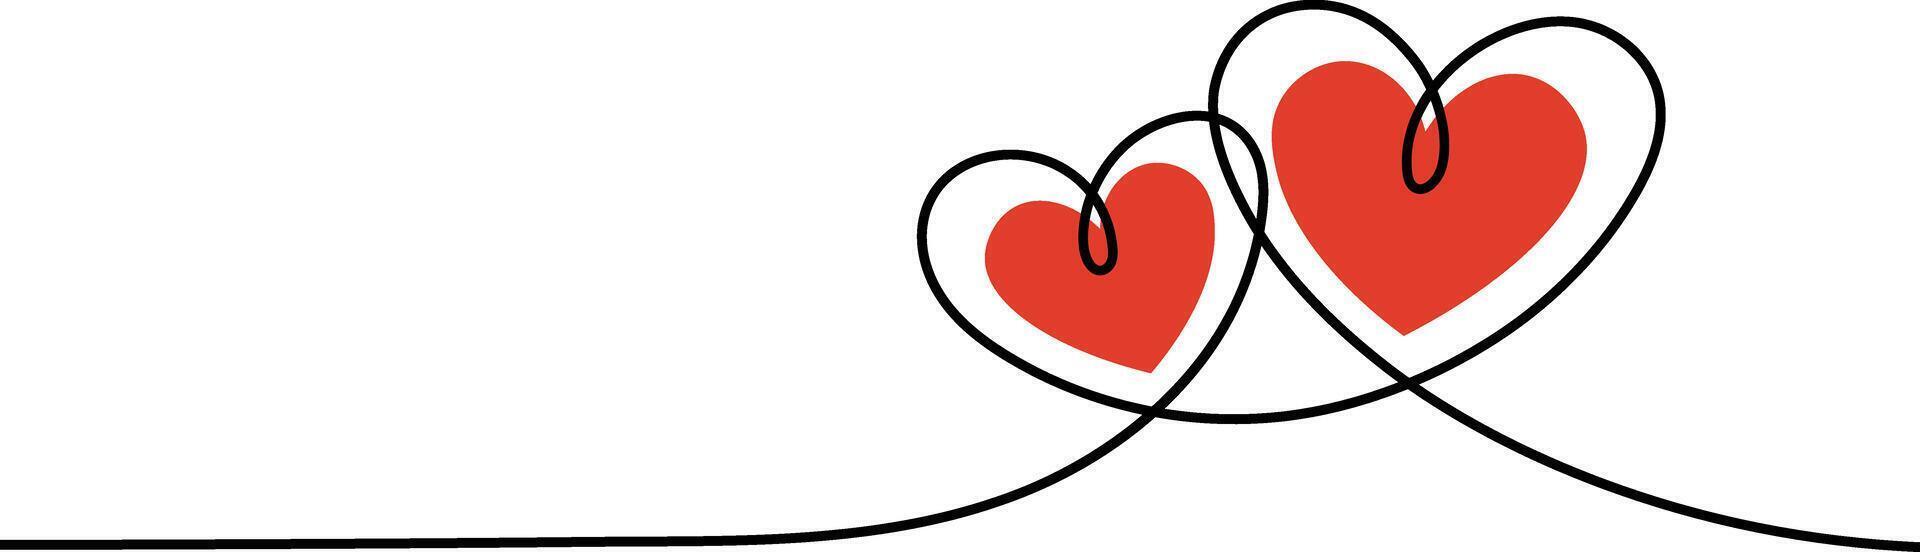 Line art valentine's card banner design, heart shape single line illustration, isolated vector